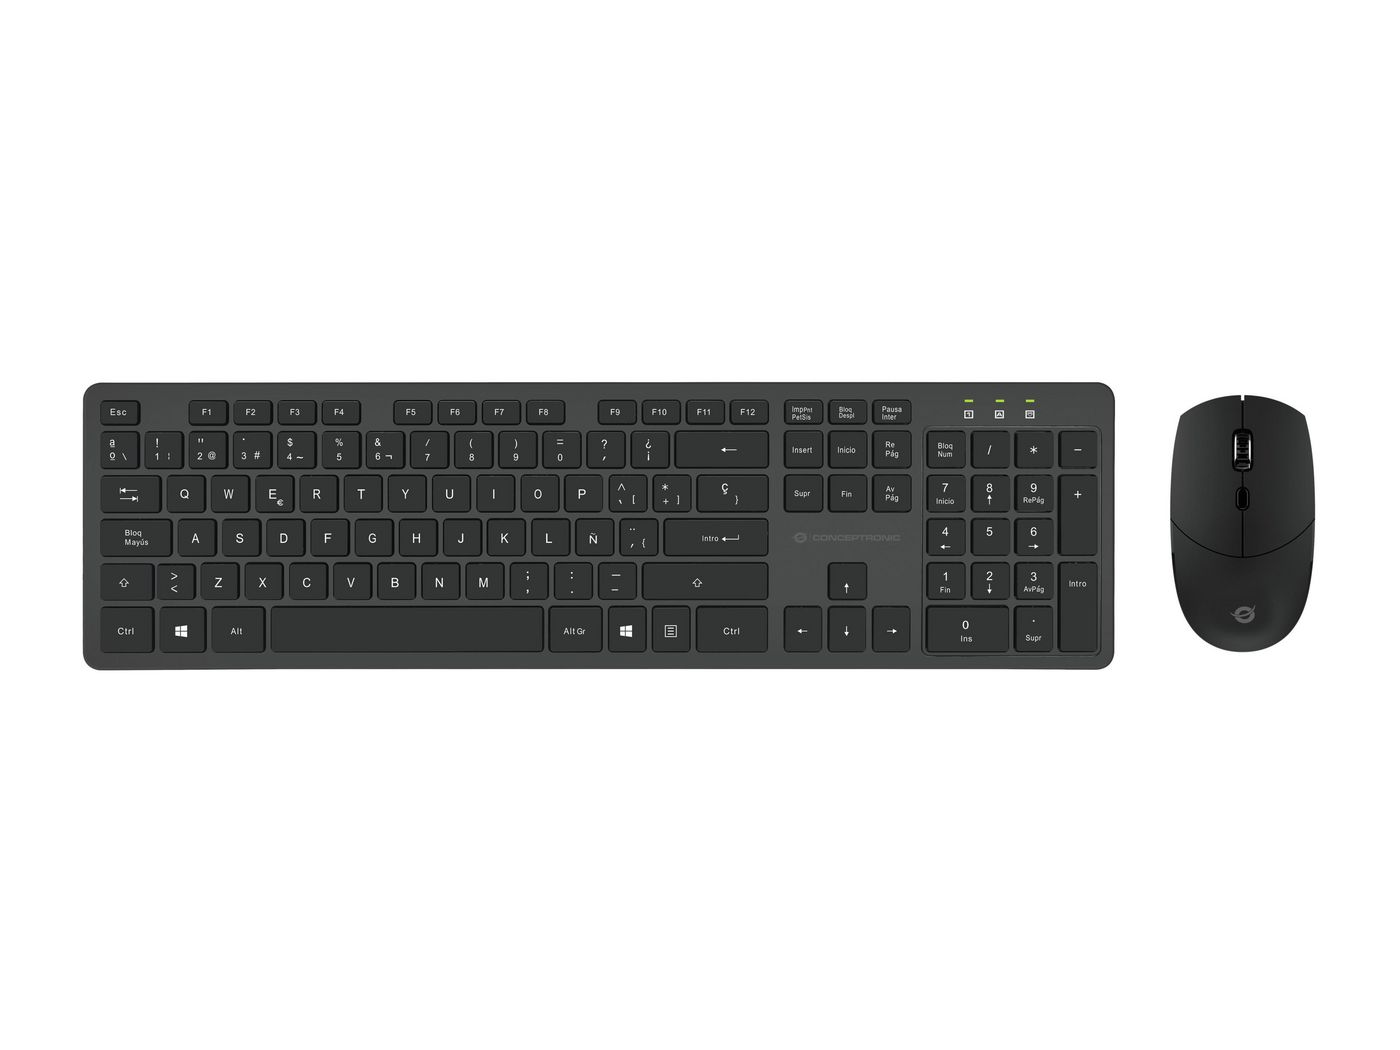 CONCEPTRONIC ORAZIO01ES Wireless Keyboard+Mouse,ES, schwarz